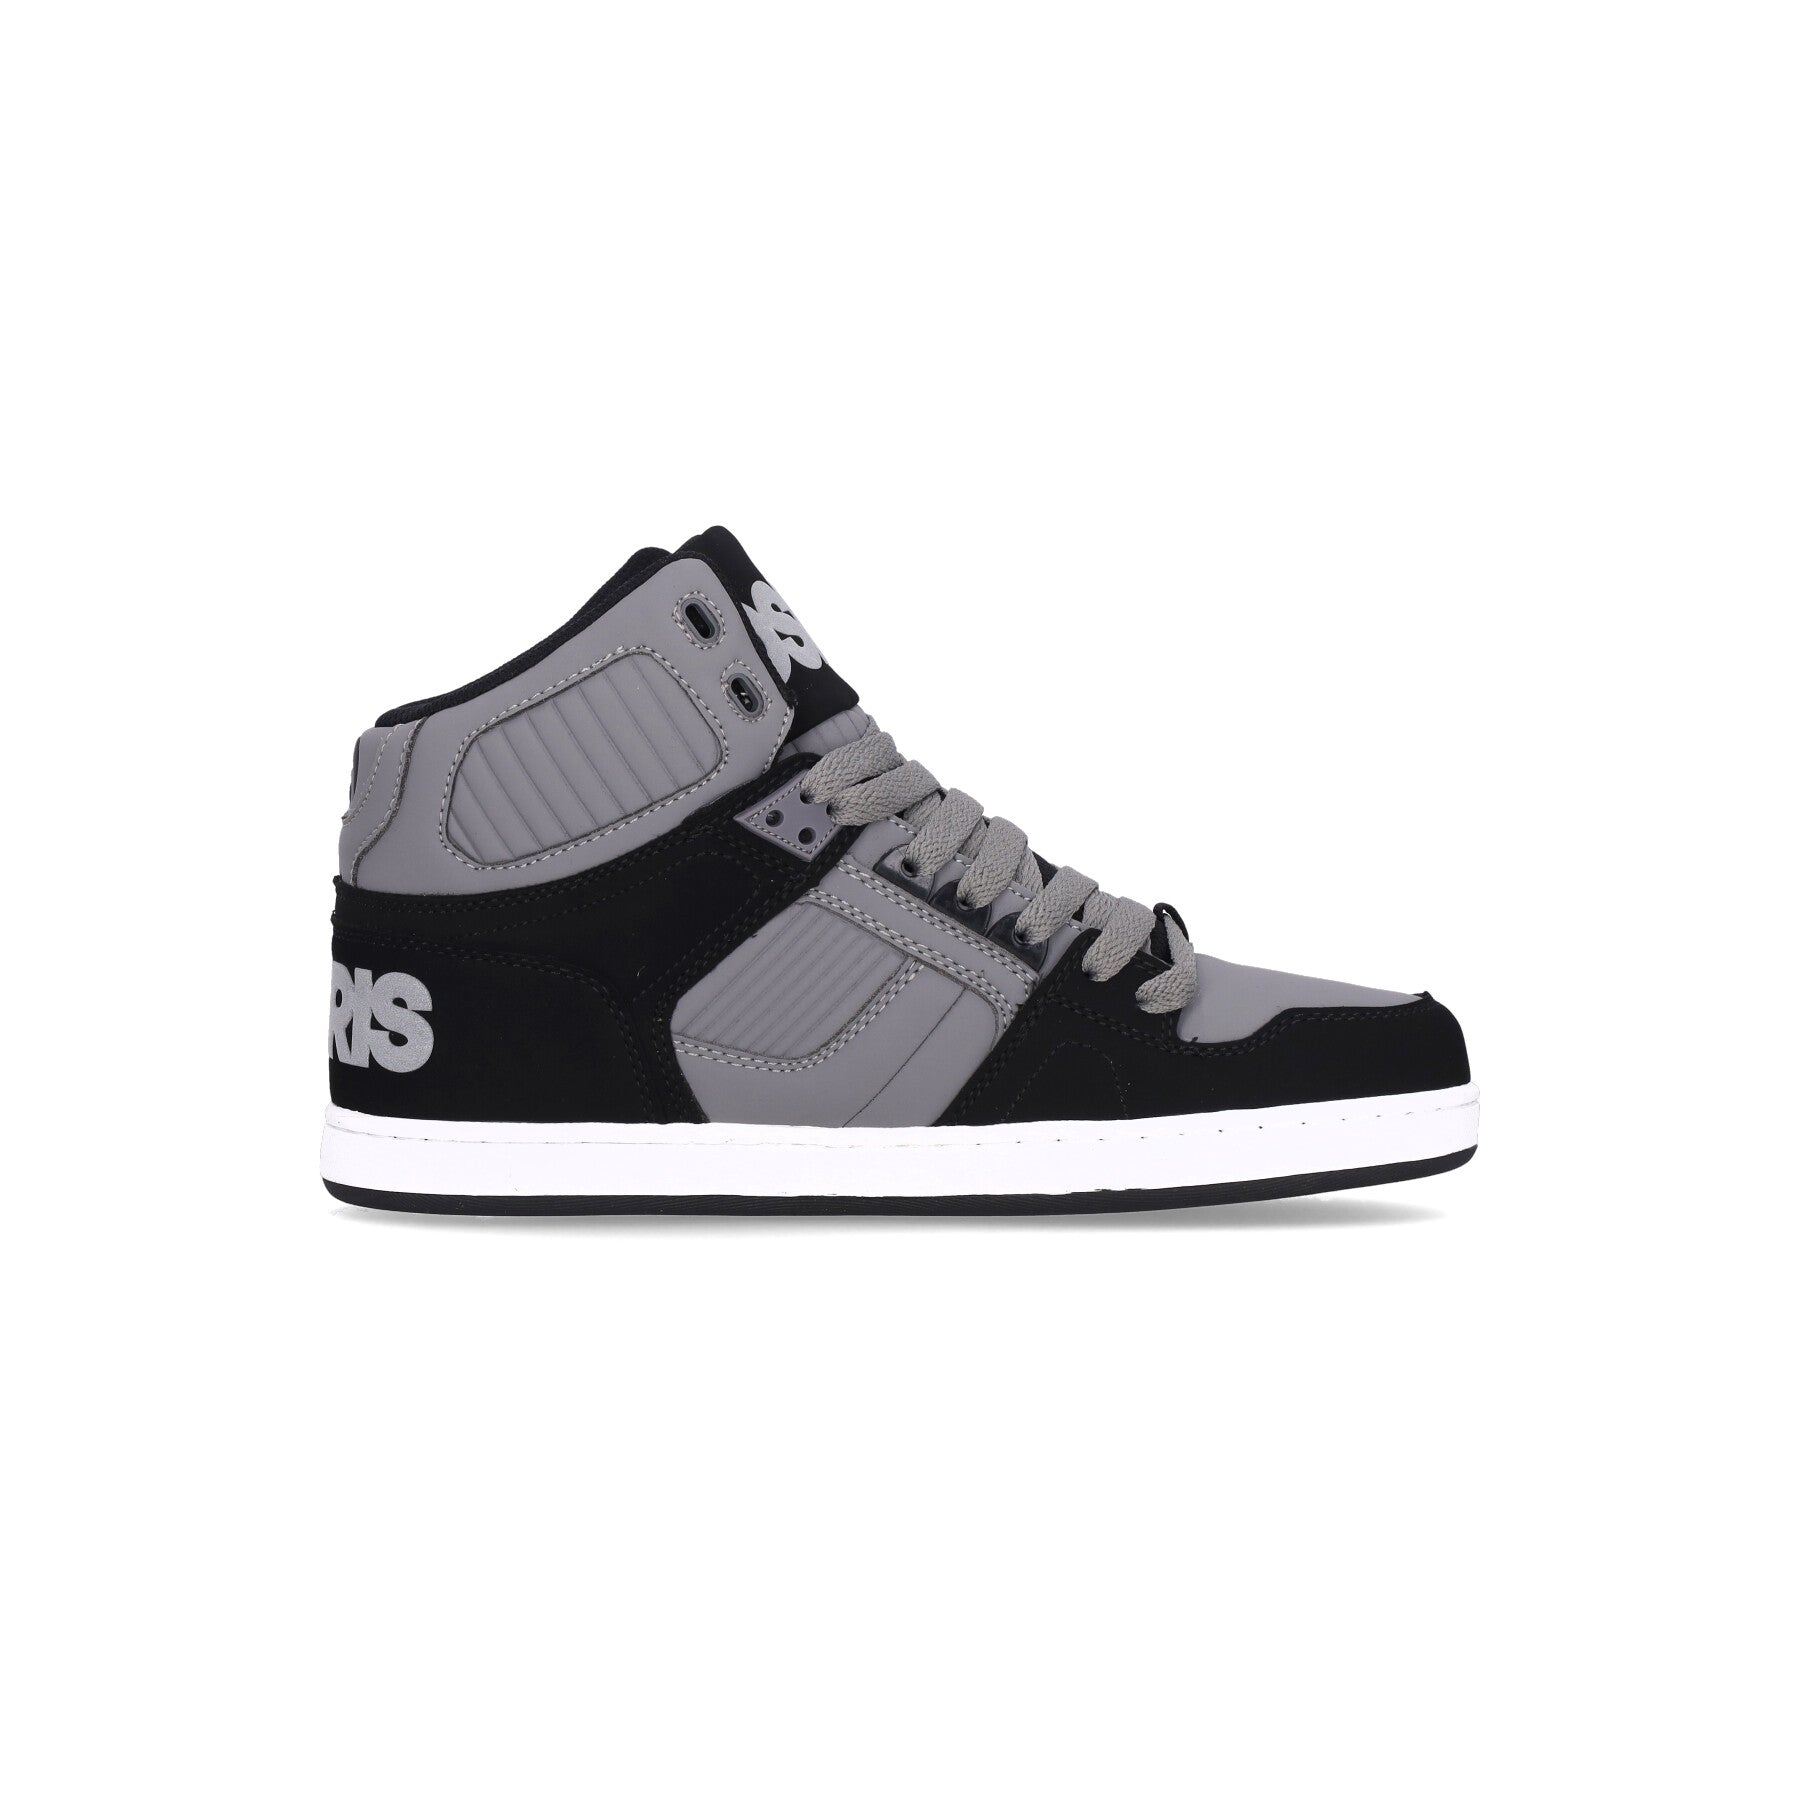 Scarpe Skate Uomo Nyc83 Clk Black/grey/white 1343117